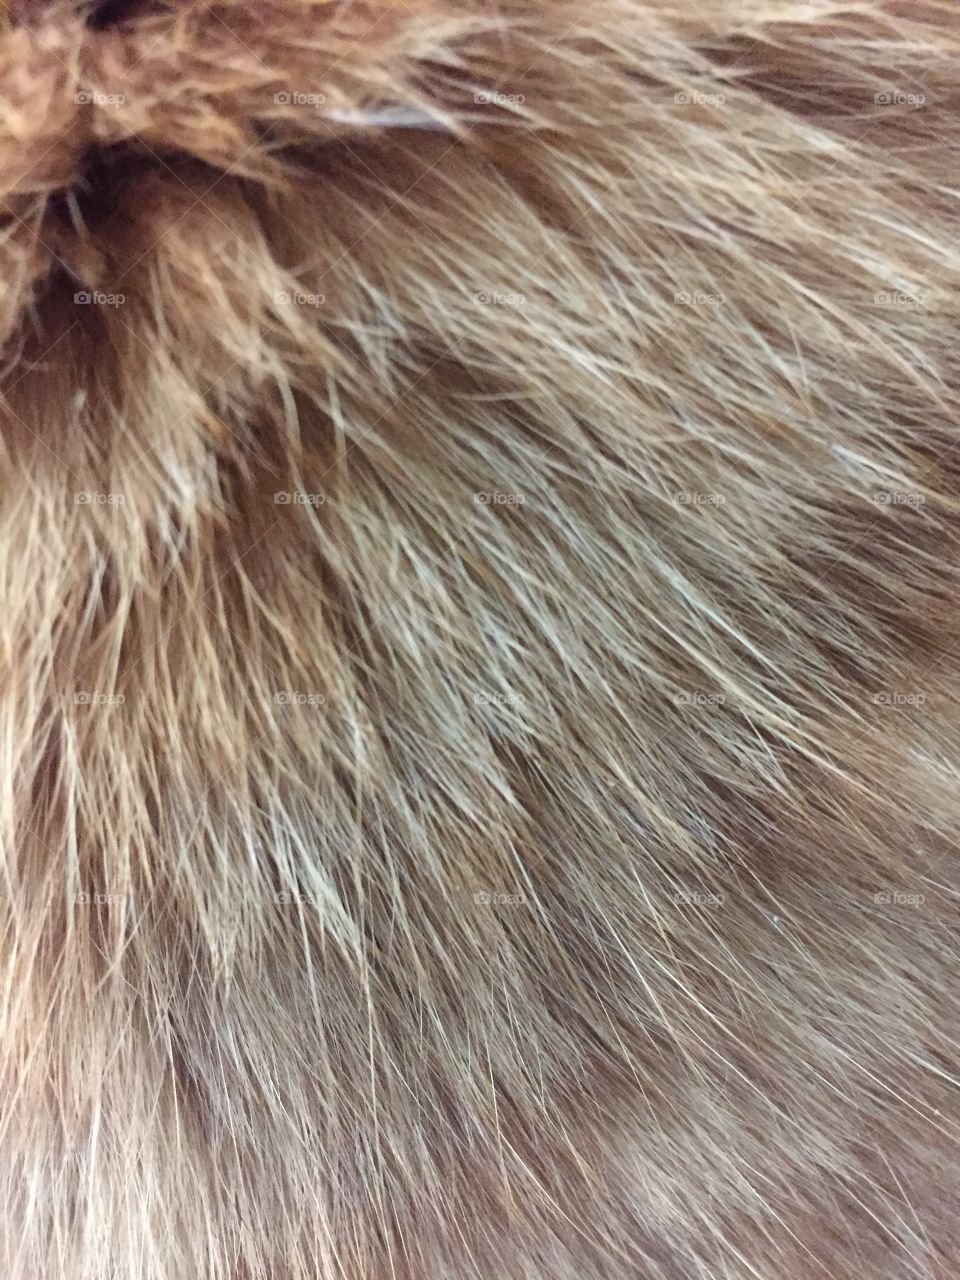 Cat hair study